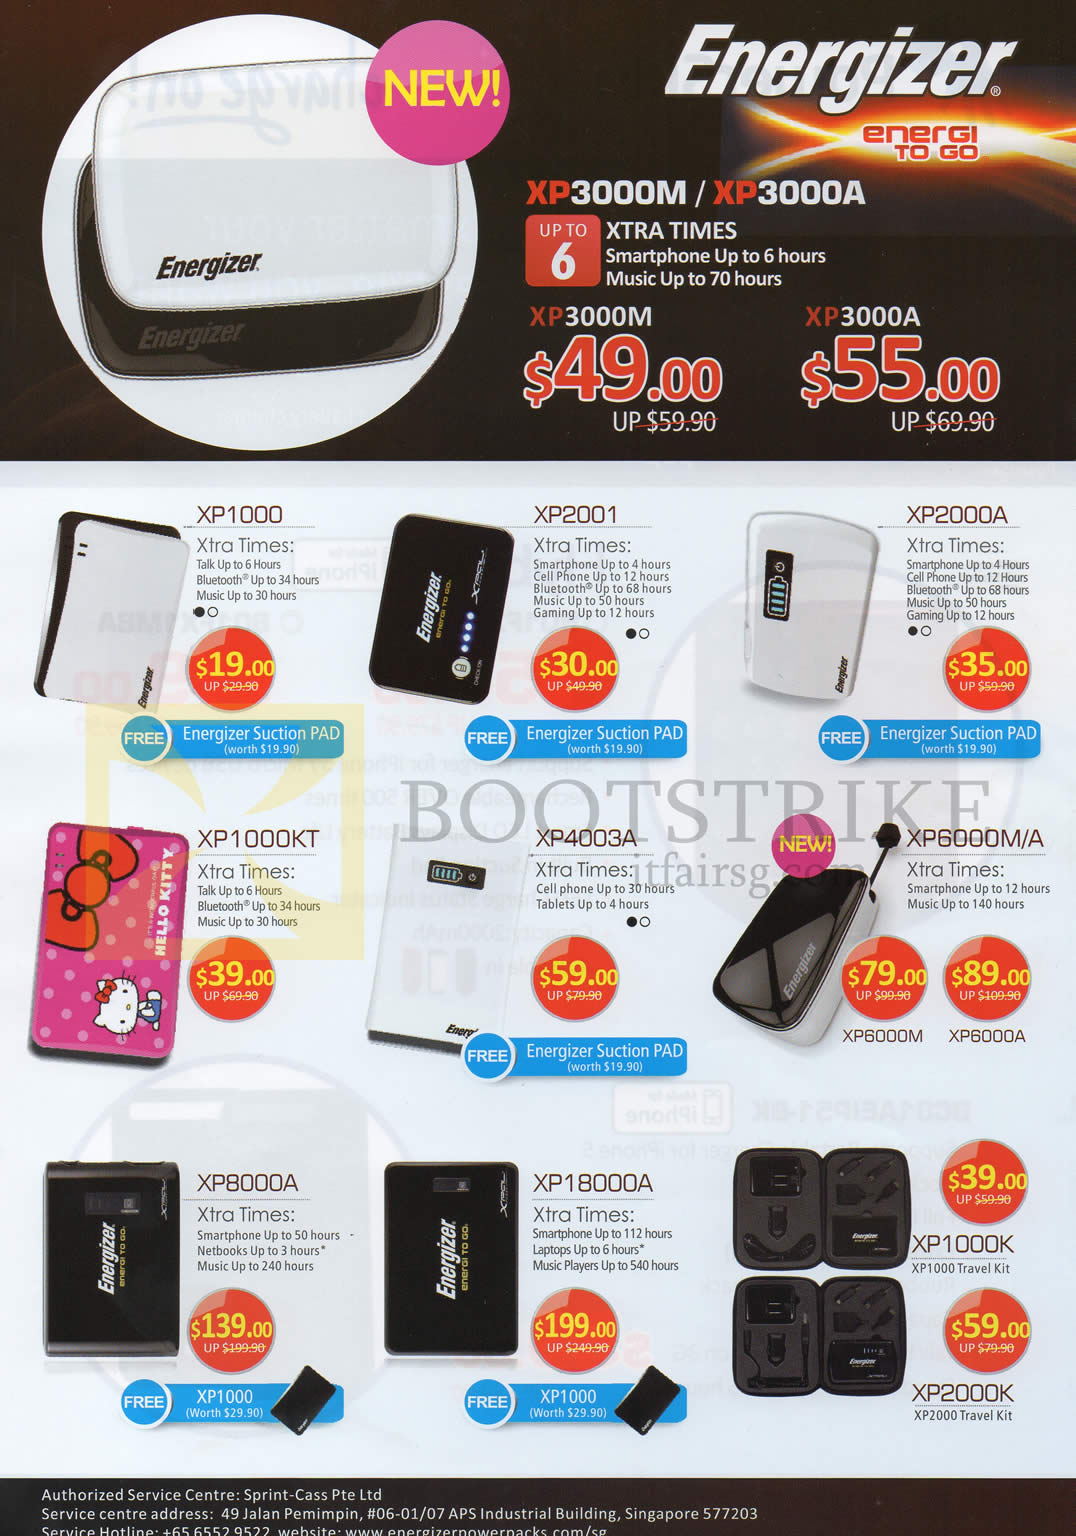 COMEX 2013 price list image brochure of Sprint-Cass Energizer External Chargers XP1000, XP2001, XP2000A, XP1000KT, XP4003A, XP6000M A, XP8000A, XP18000A, XP1000K, XP2000K